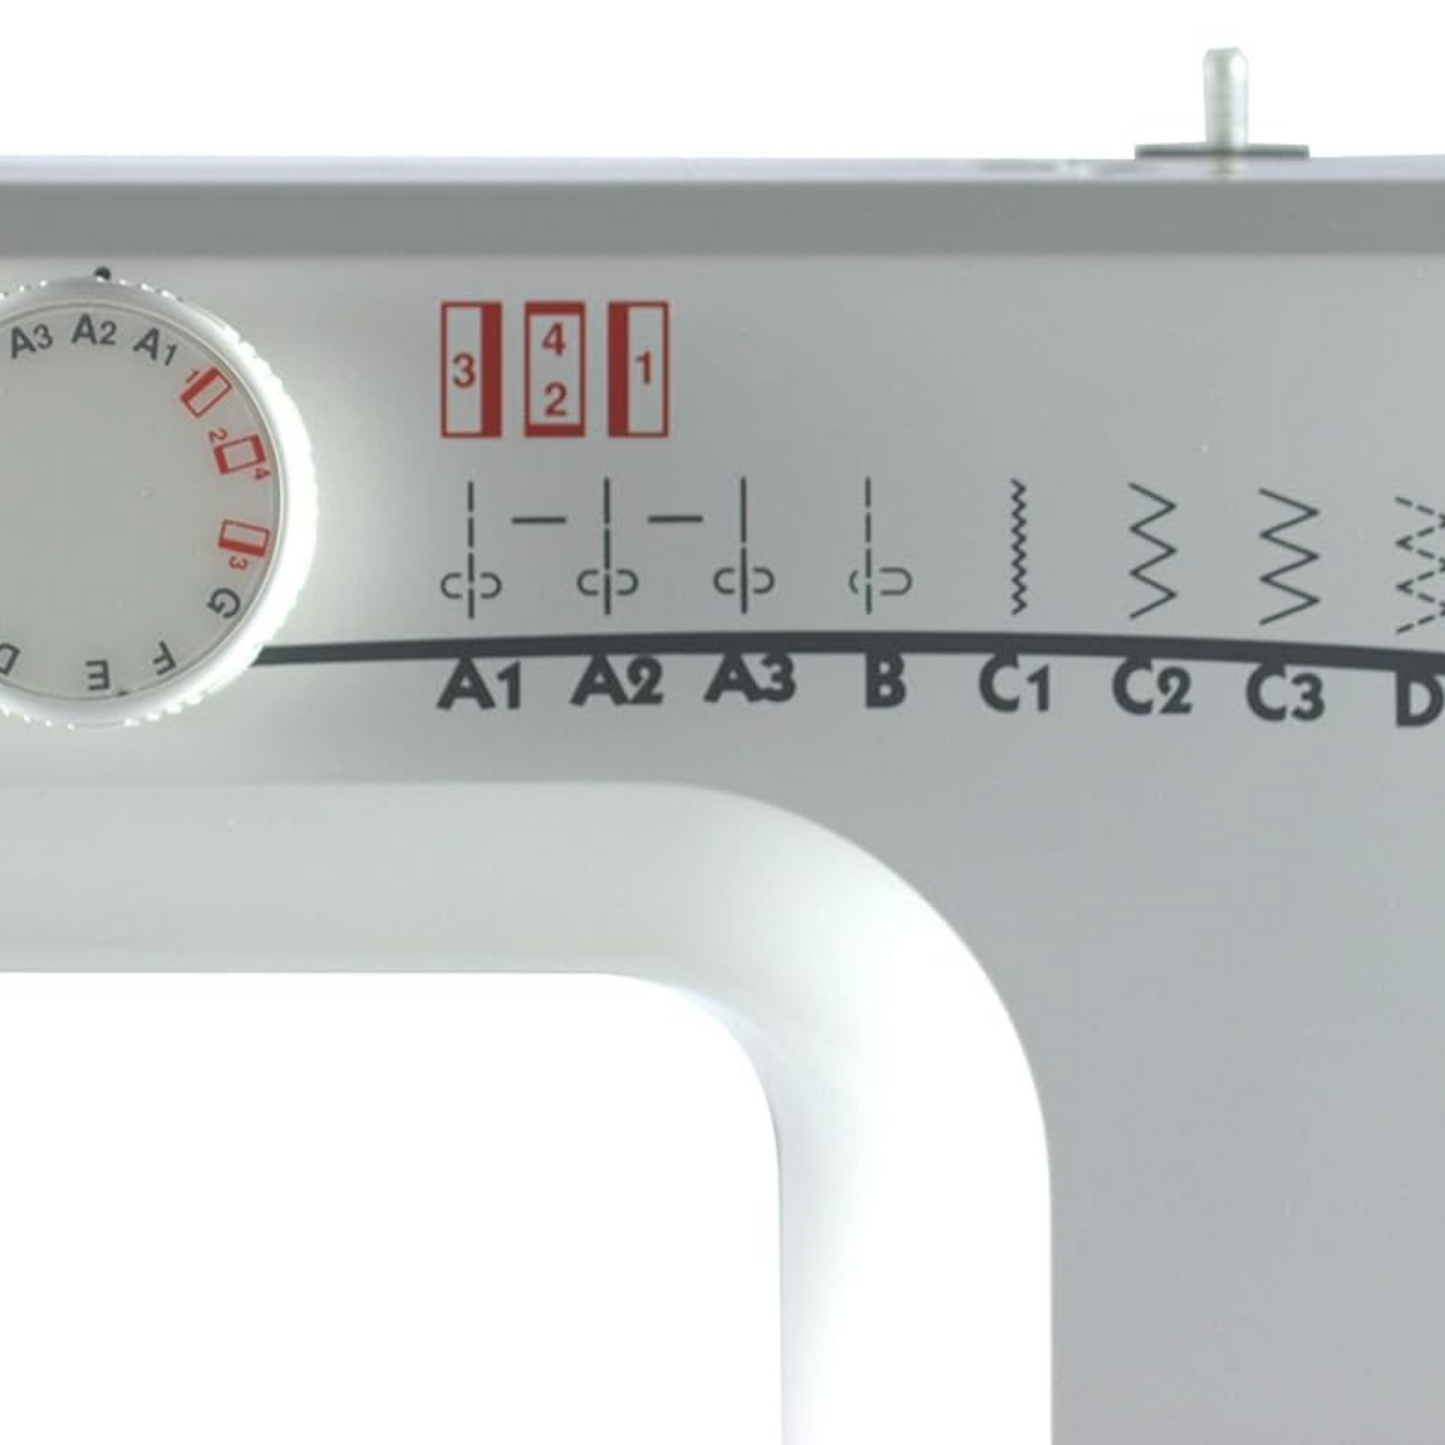 Janome Re1706 sewing machine